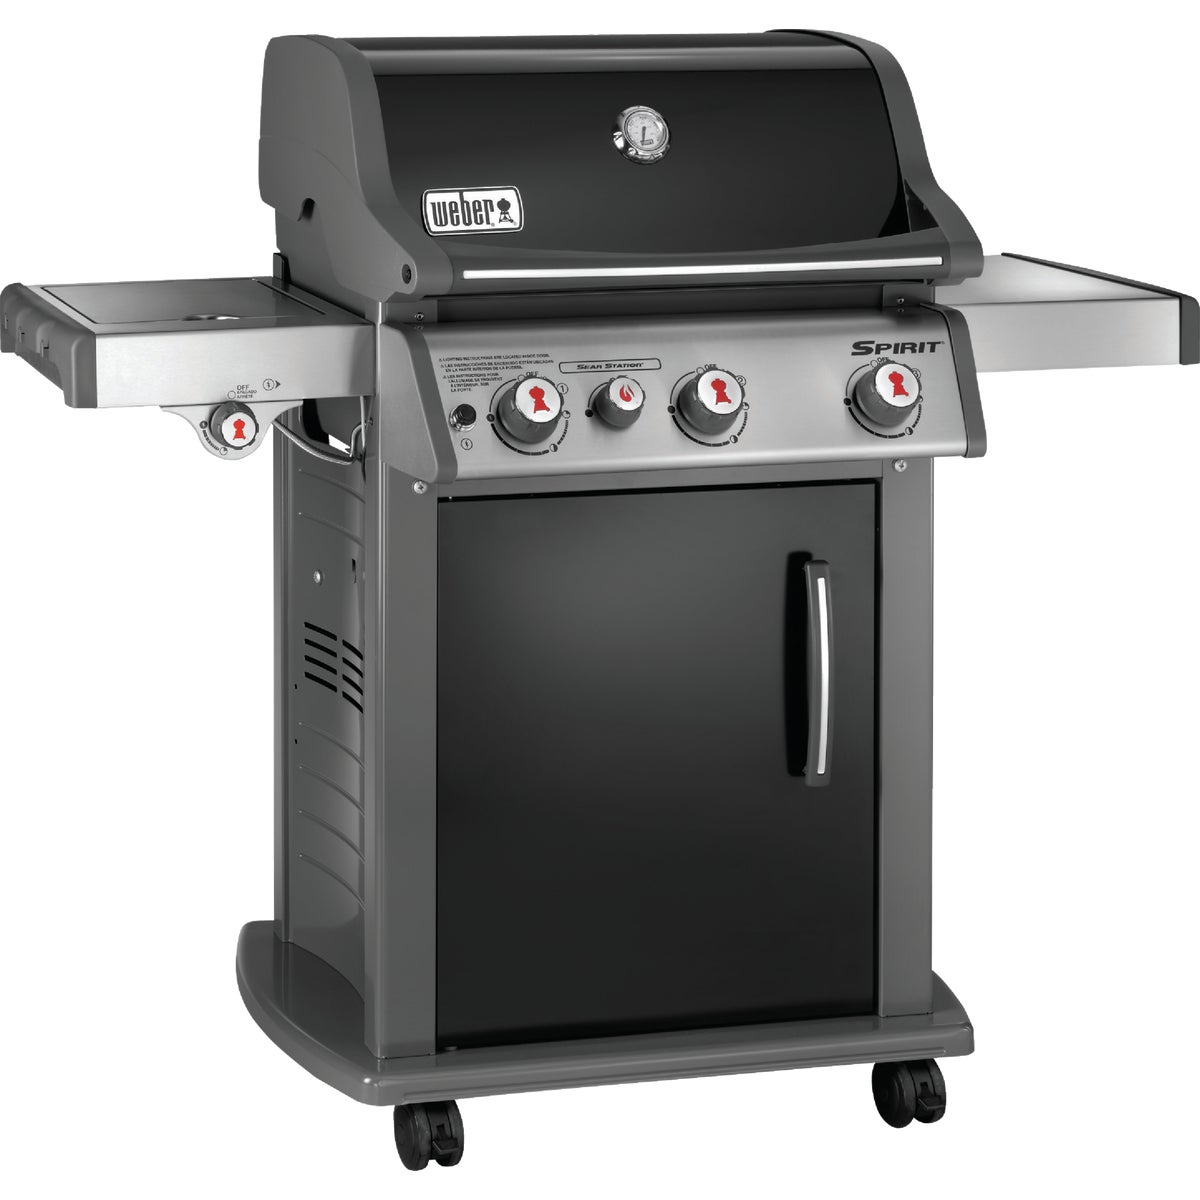 Item 801187, Spirit E-330 grill includes a 12,000 BTU side burner and a 7,500 Sear 